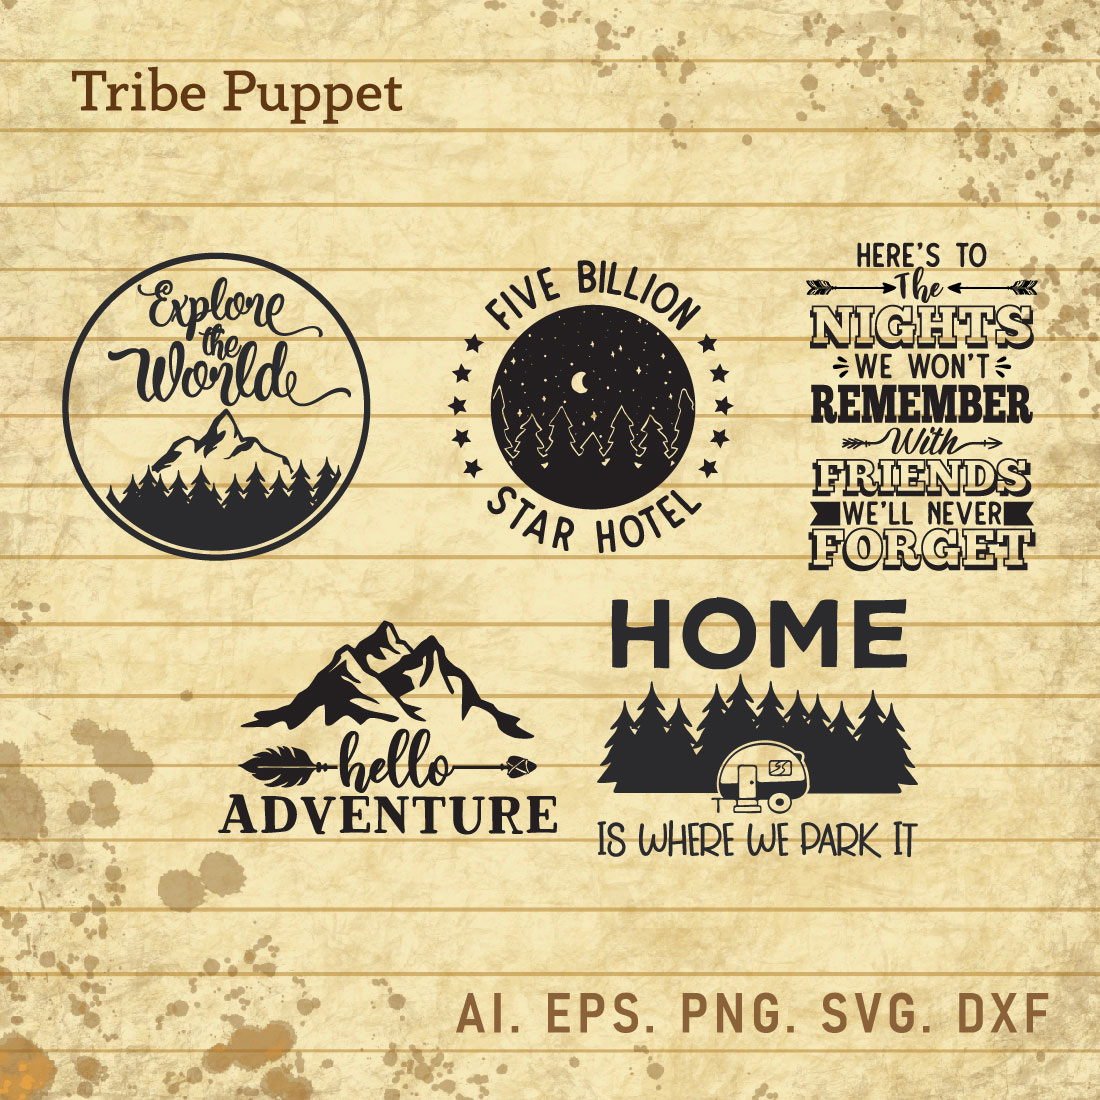 Adventure Typo cover image.